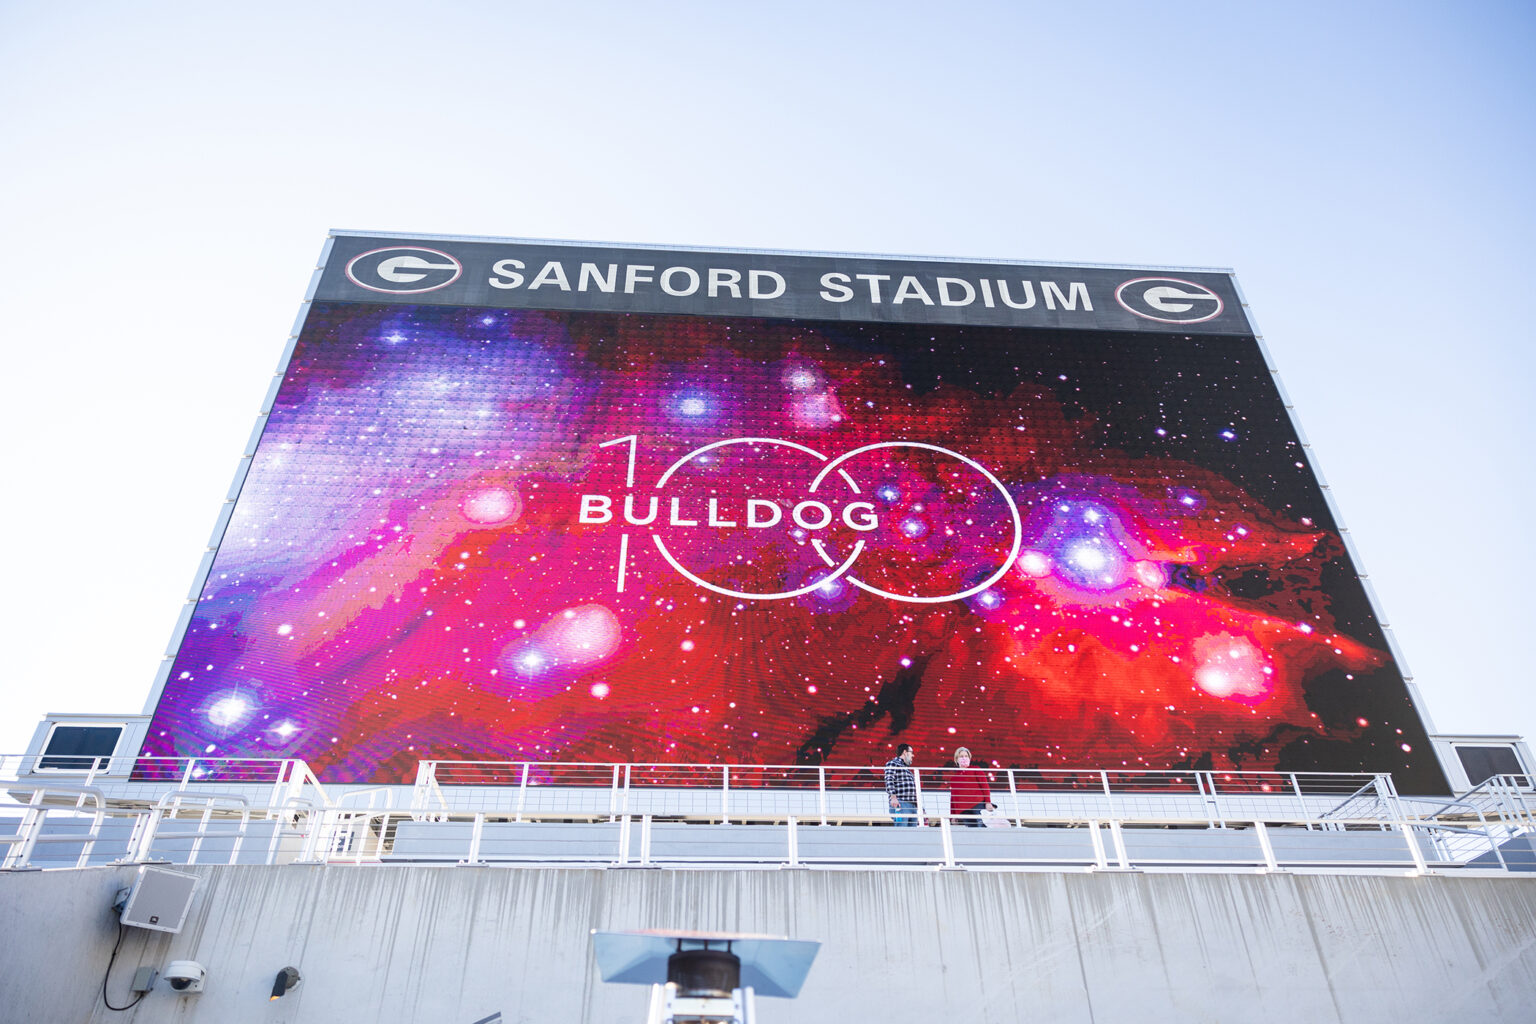 A jumbotron at Sanford Stadium displays the Bulldog 100 promotional mark